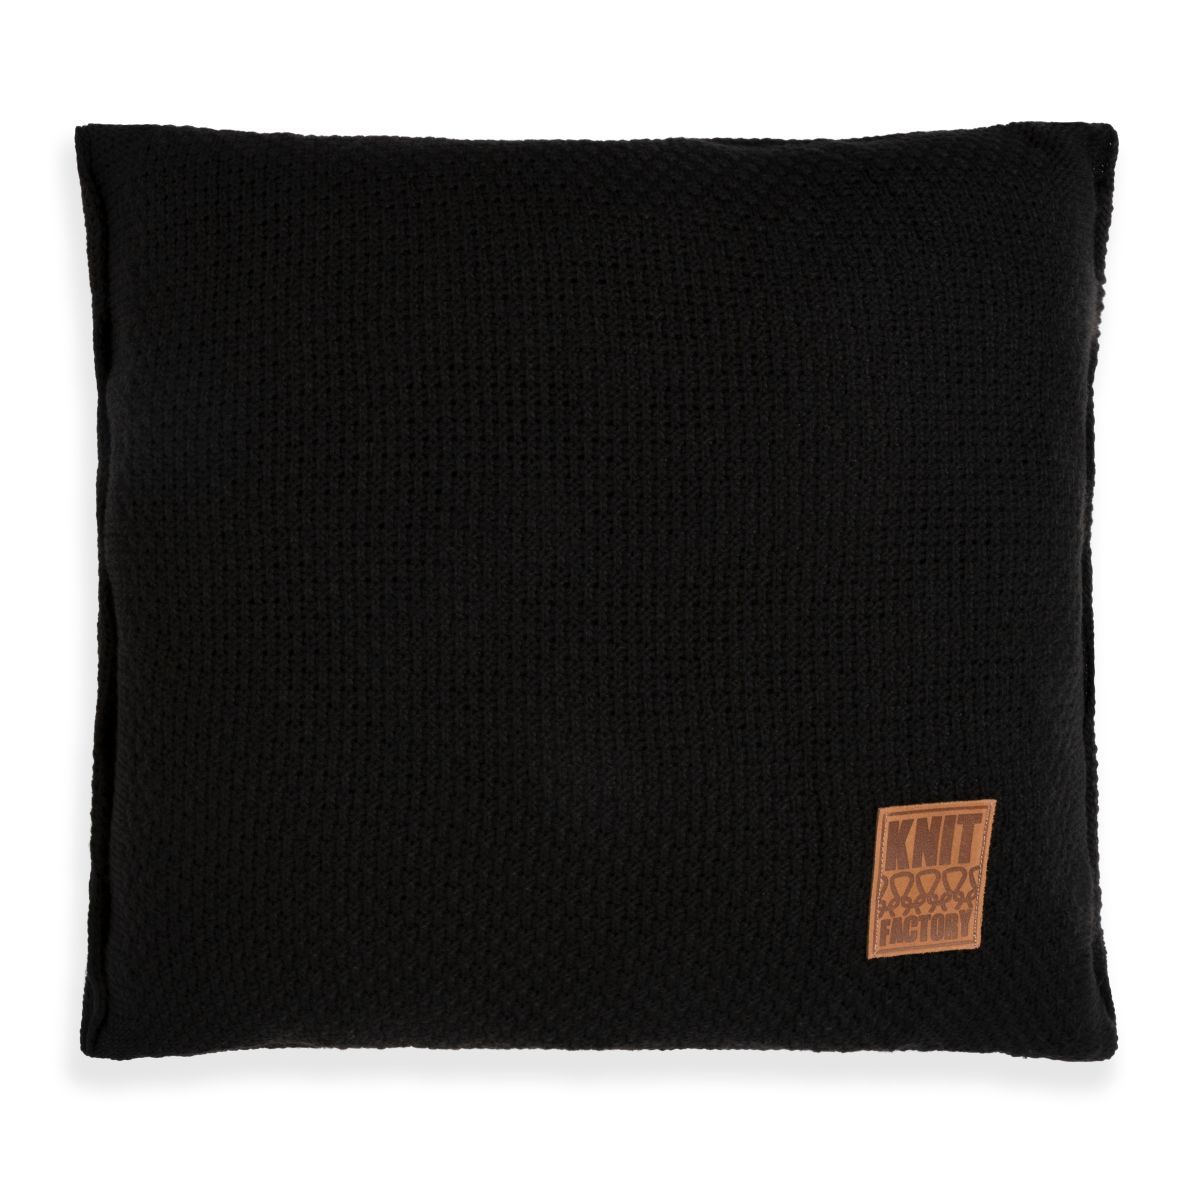 jesse cushion black 50x50